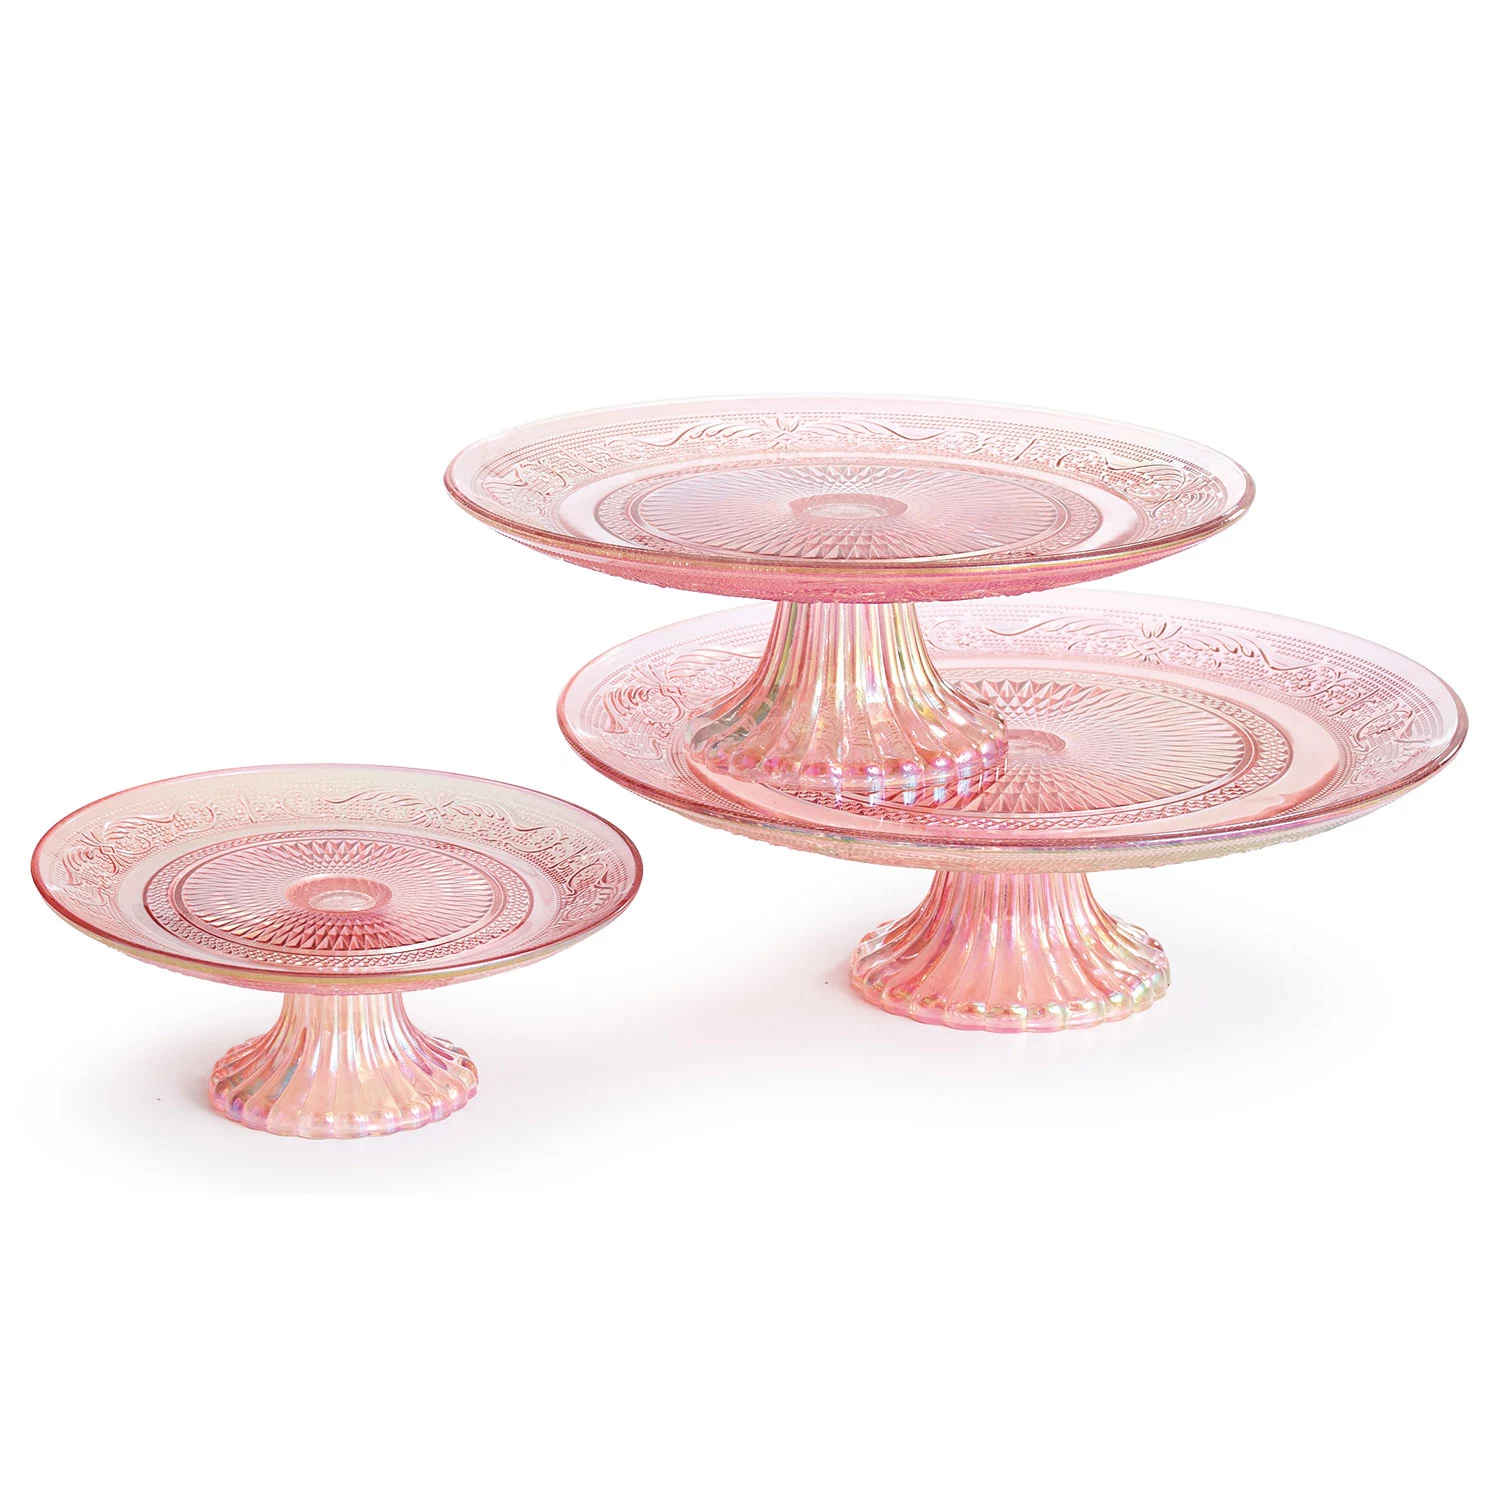 Pink Iridescent Pedestal Cake Stands Vintage Rentals by Royal Table Settings. Ponk glassware rentals. 